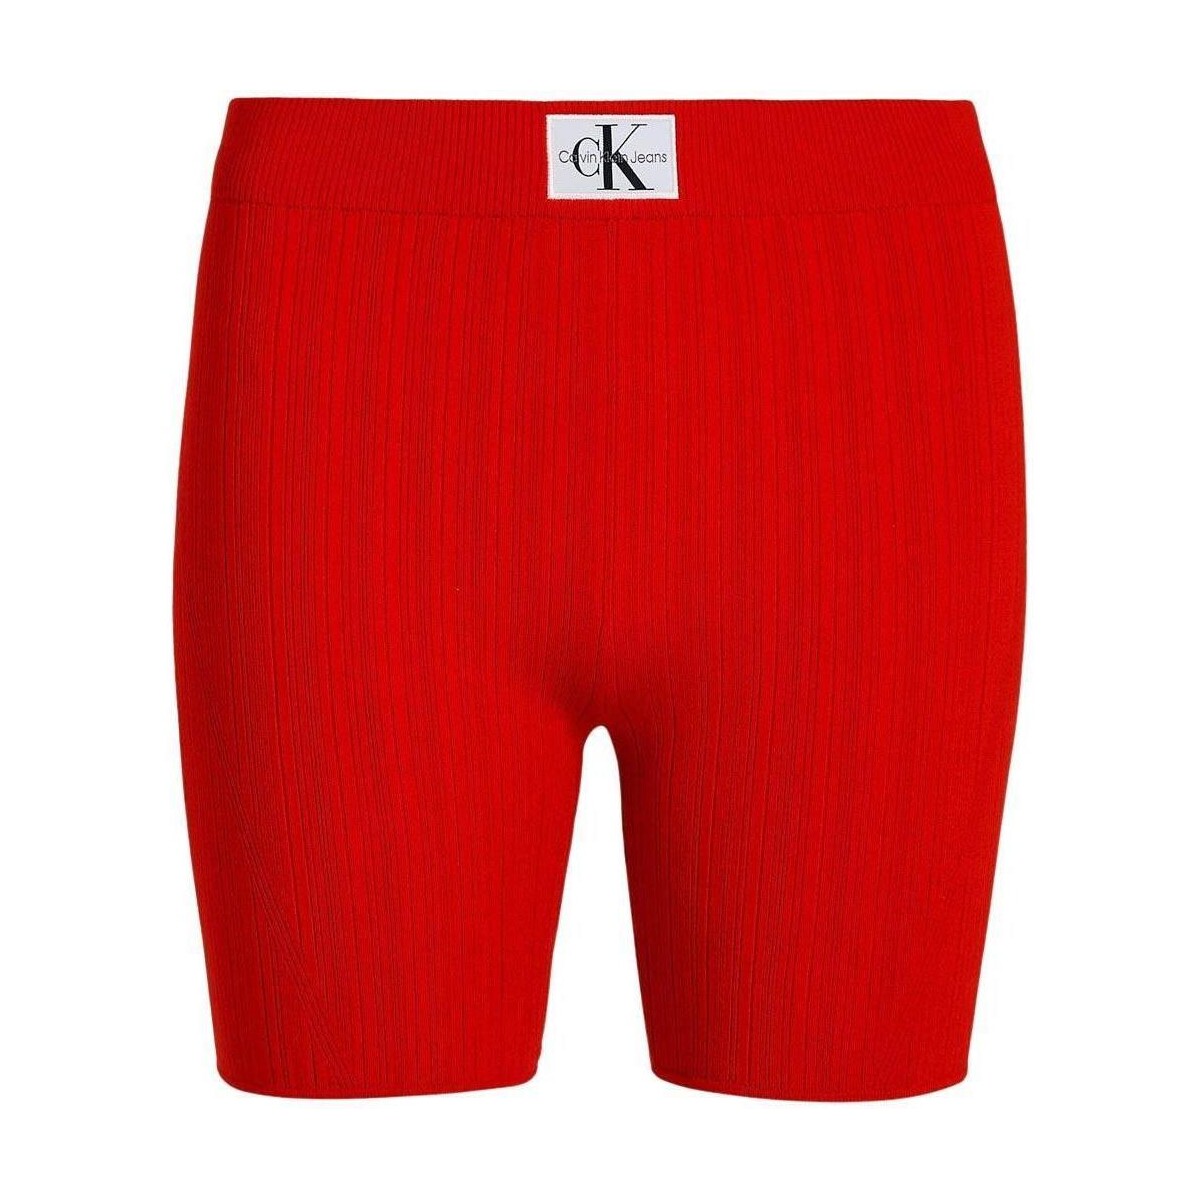 Textil Mulher Shorts / Bermudas Calvin Klein Jeans  Vermelho